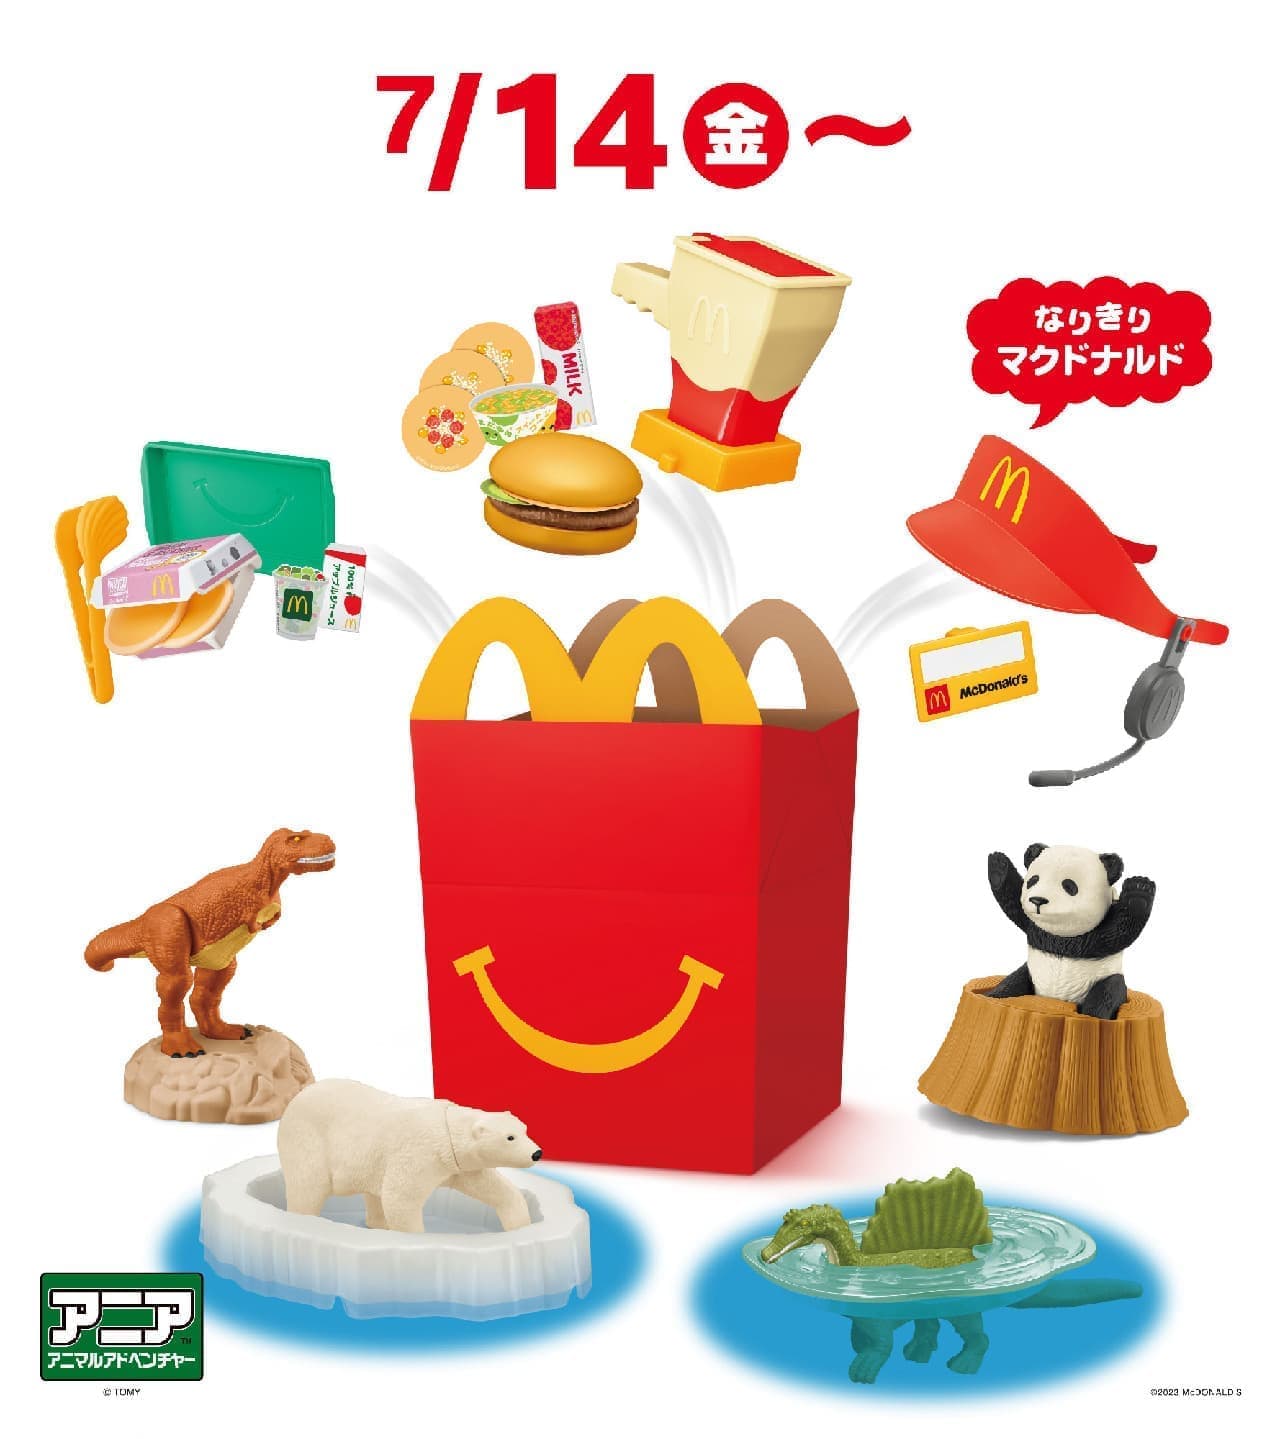 McDonald's Happy Set "McDonald's Adventure" and "Ania